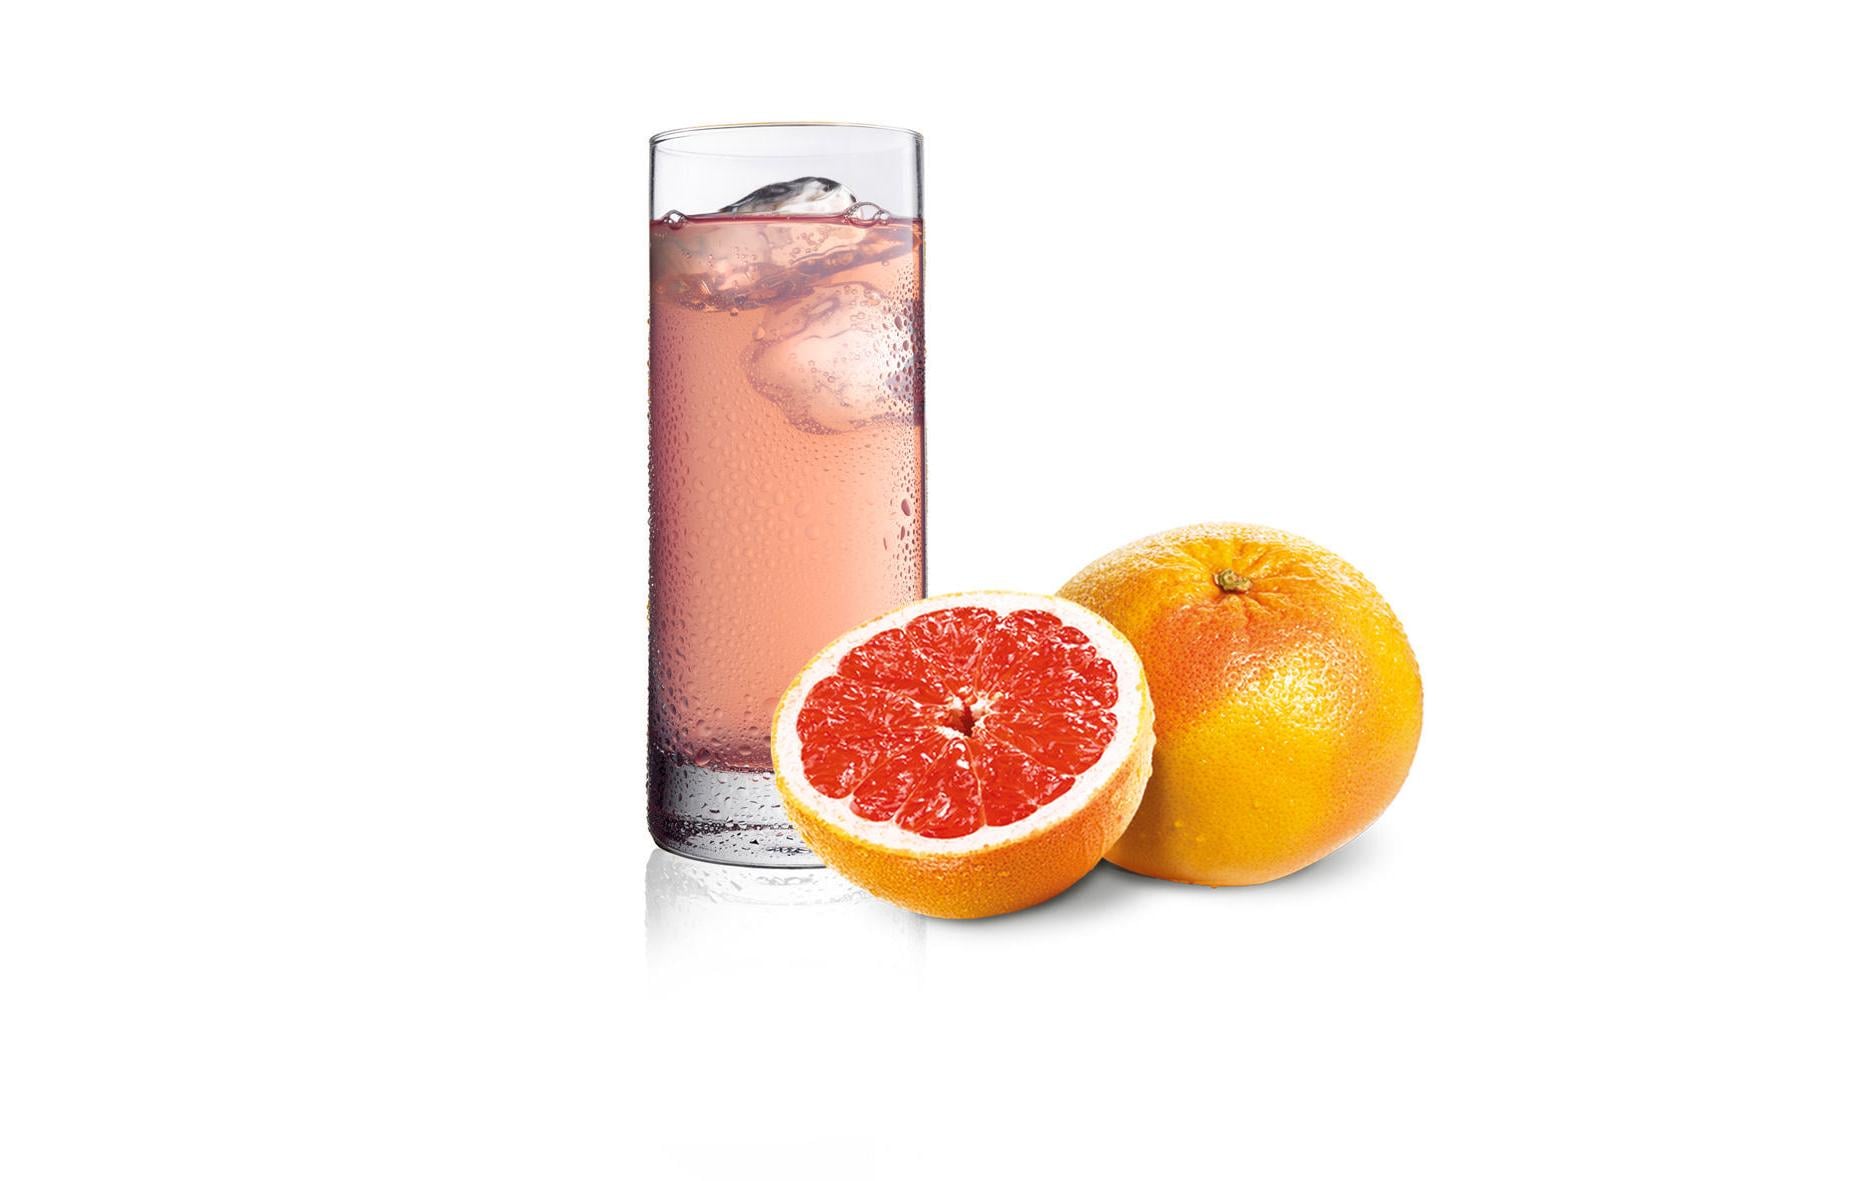 Sodastream Sirup Soda-Mix Pink Grapefruit 500 ml